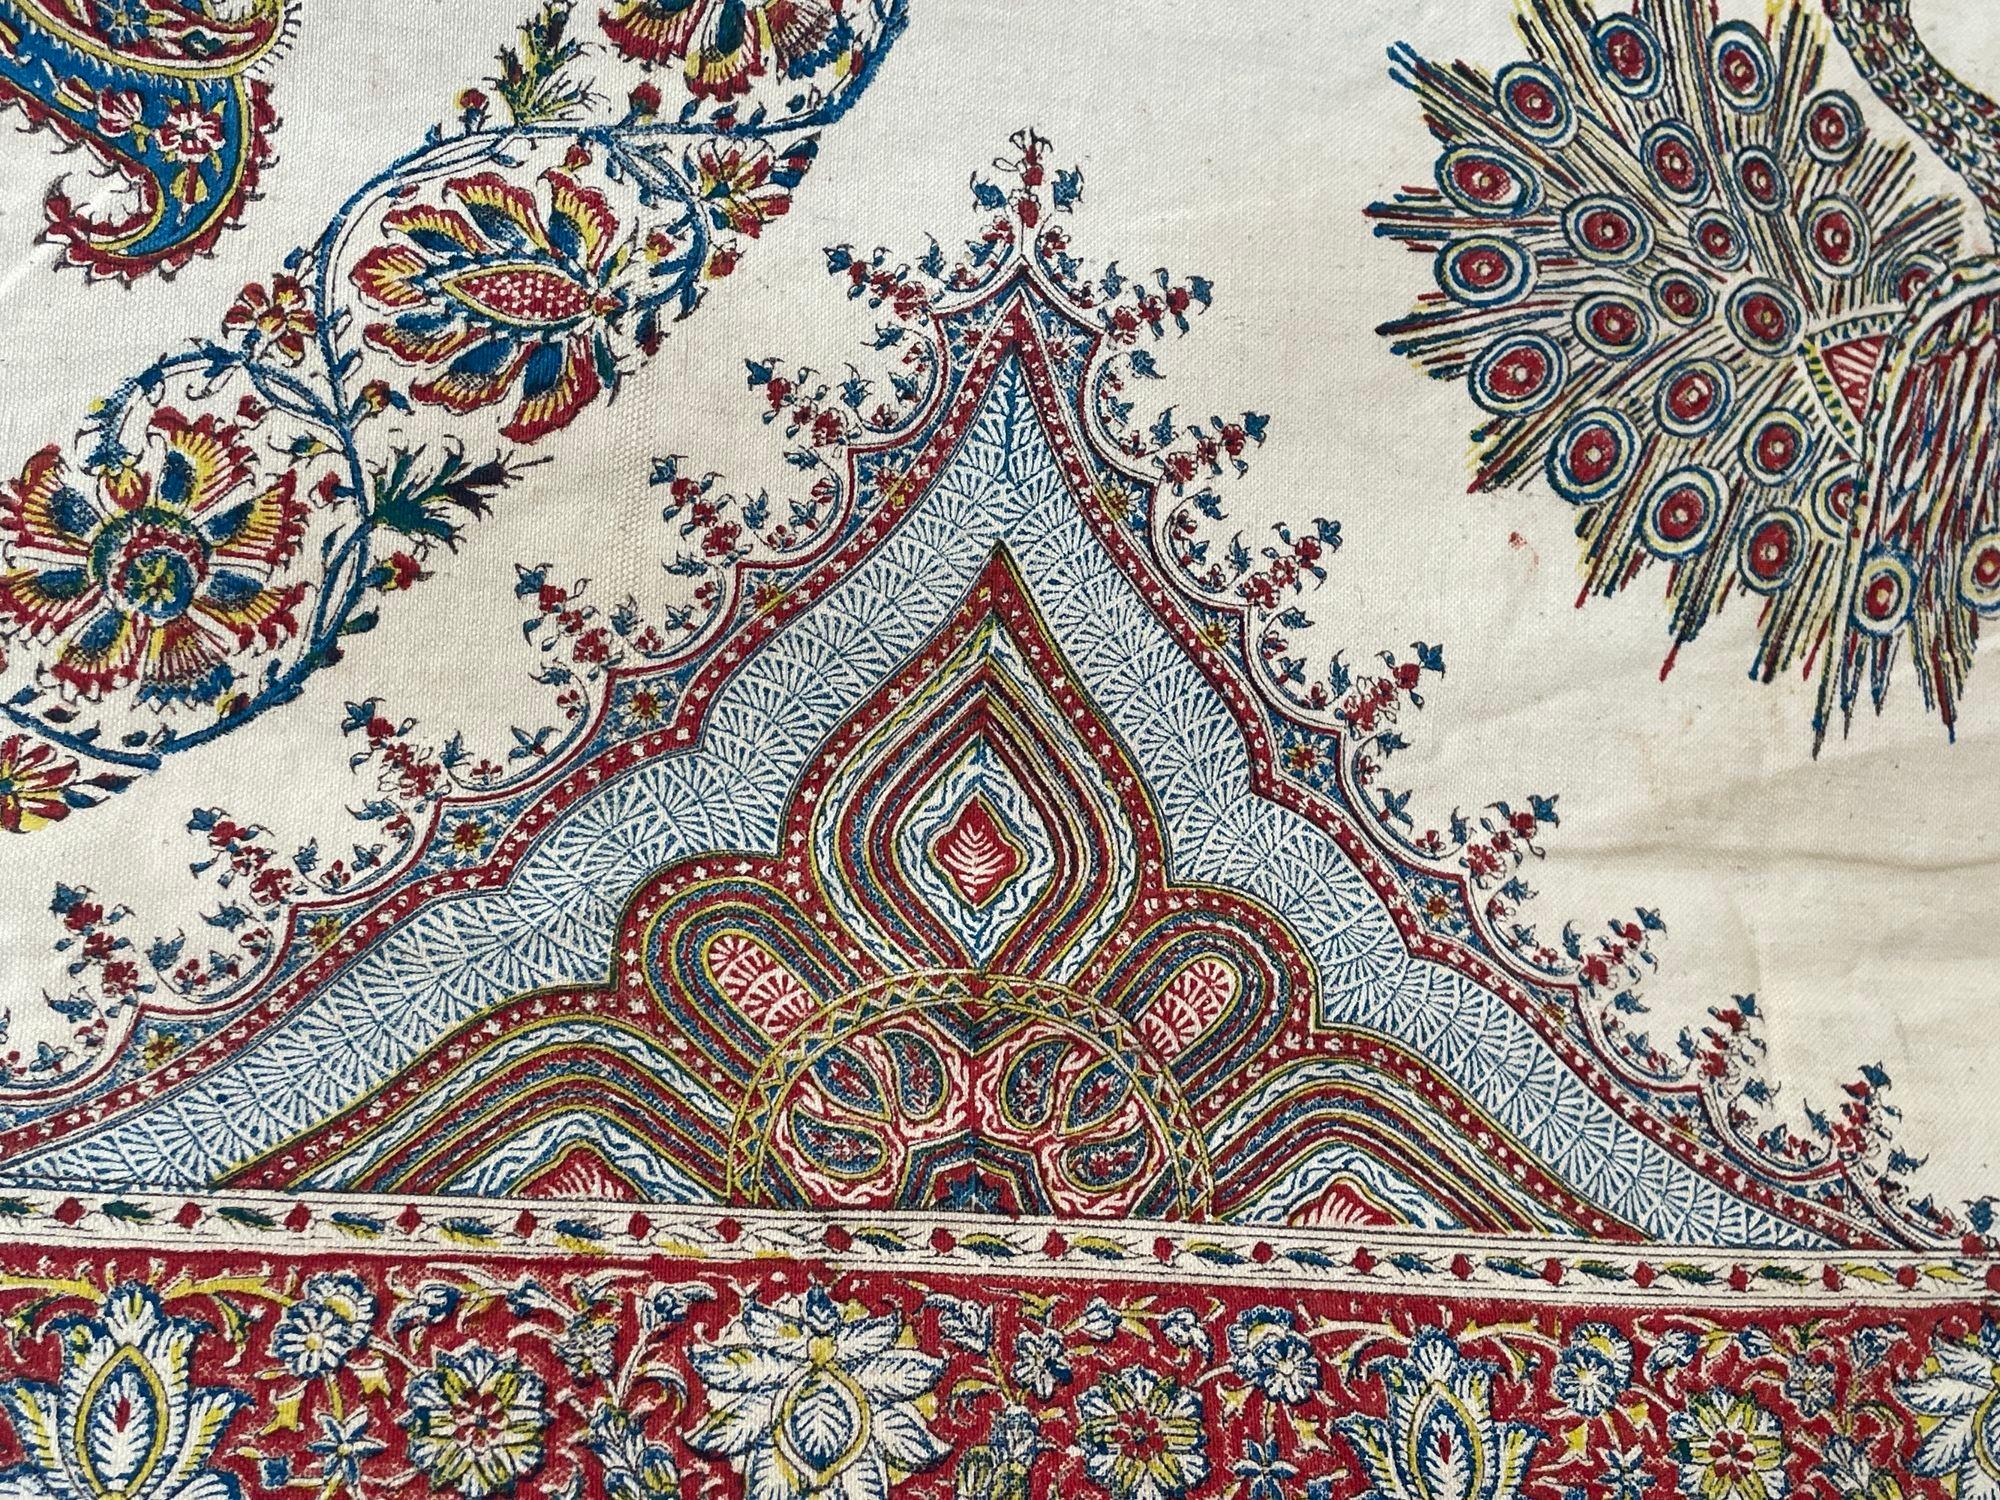 Large Isfahan Ghalamkar Persian Paisley Textile Block Printed 1950s For Sale 8